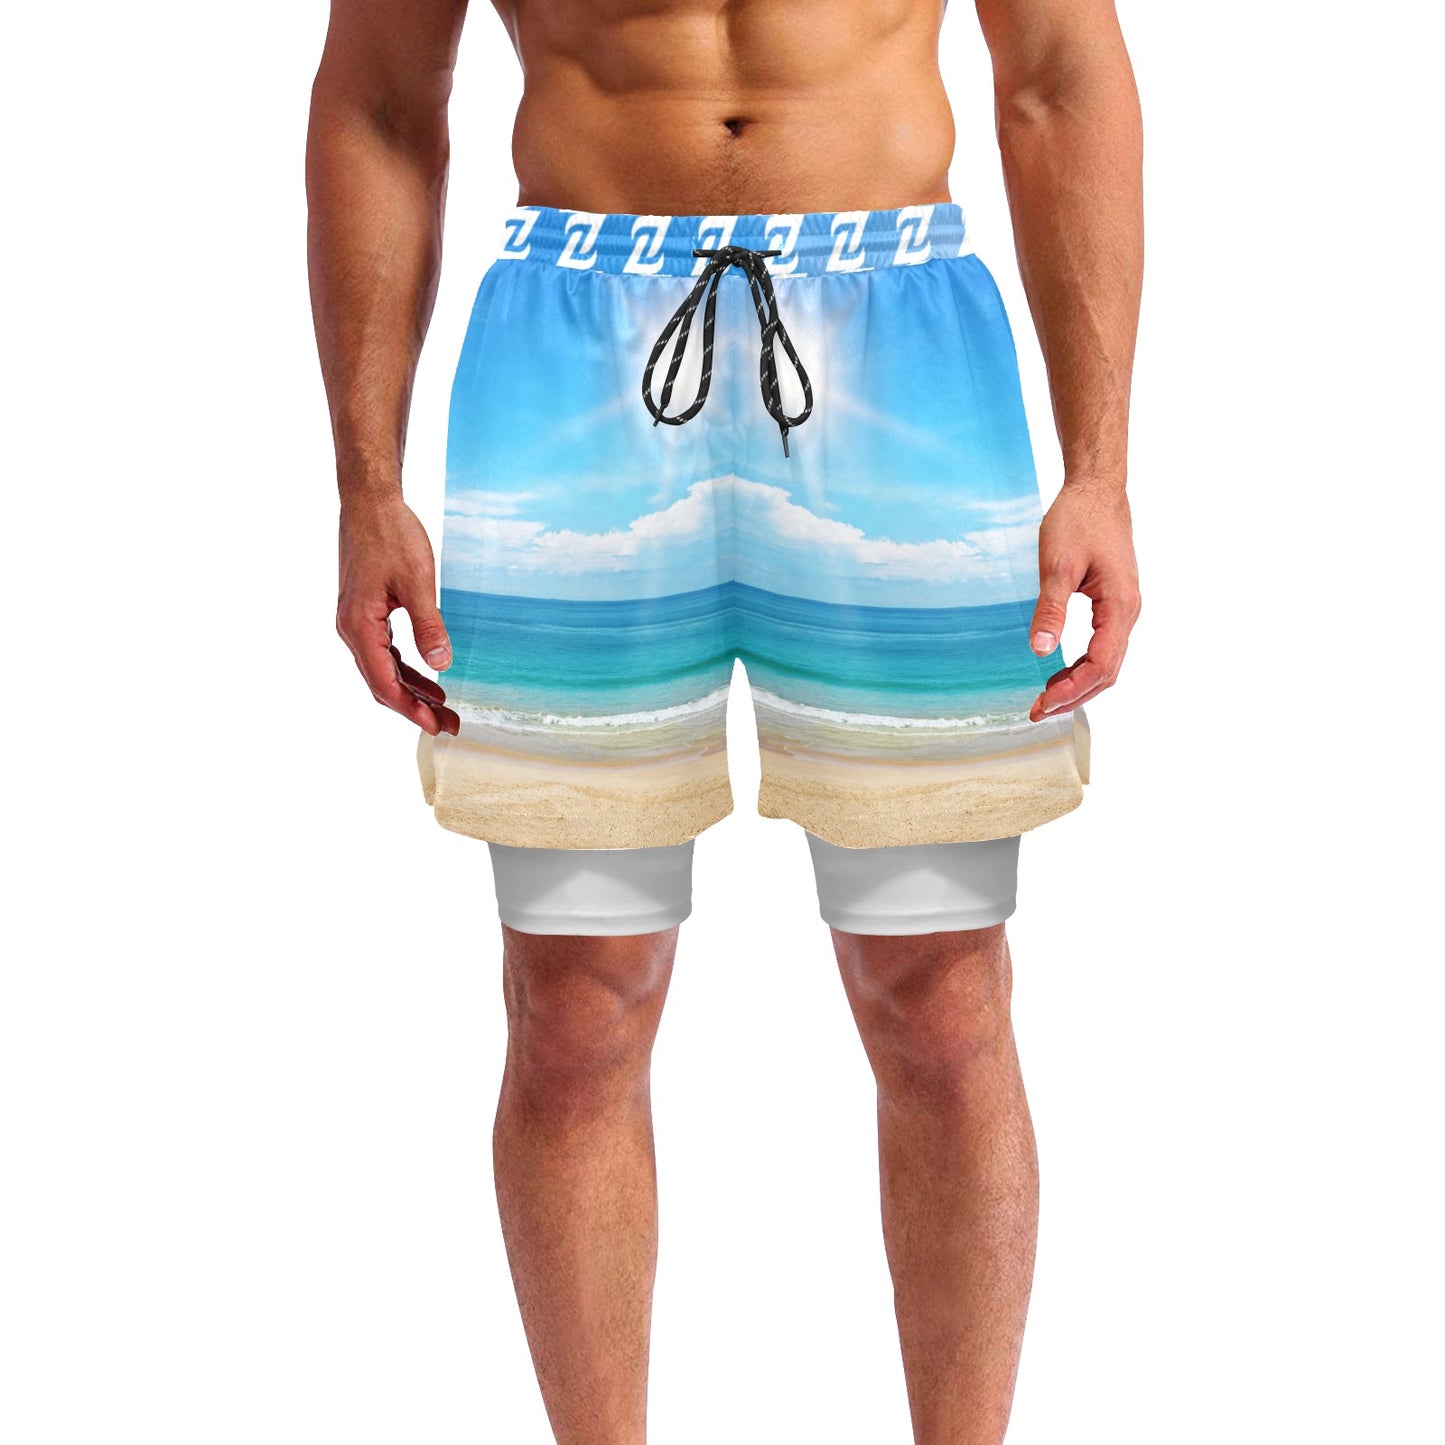 Zen Shorts with Liner - Beach